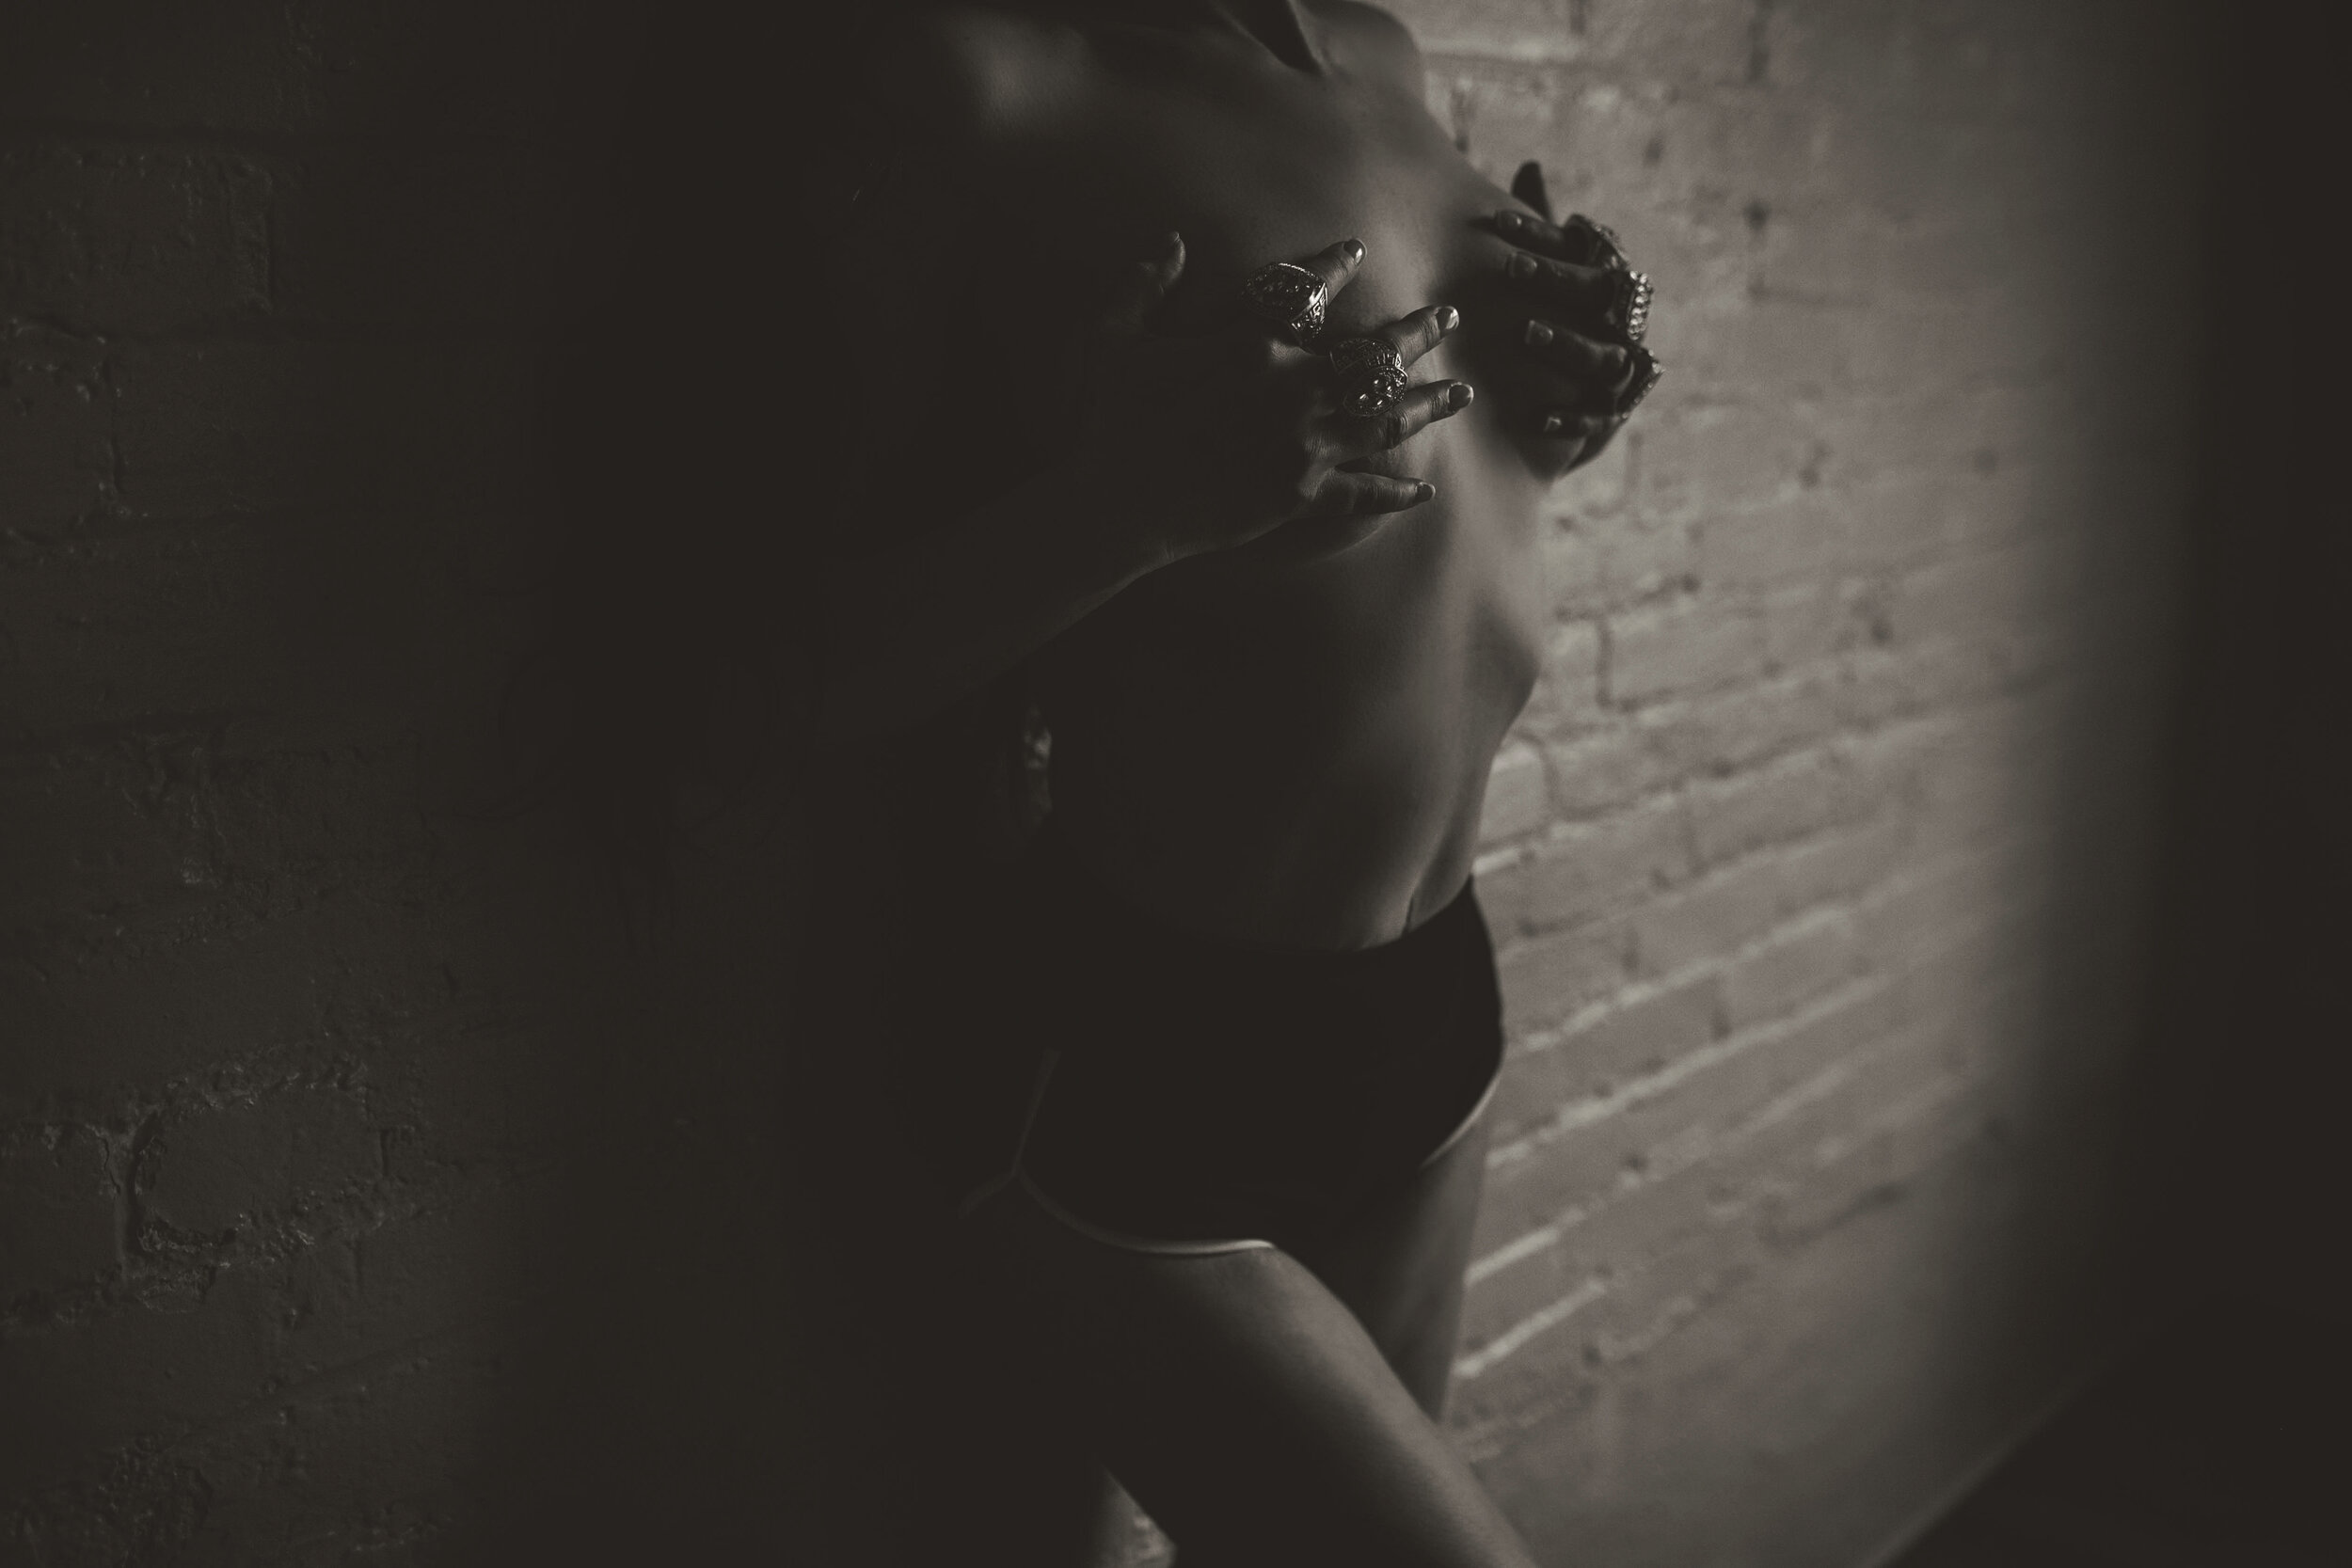 bella-rosa-blog-amys-bump-on-head-boudoir-shoot-experience-12.jpg